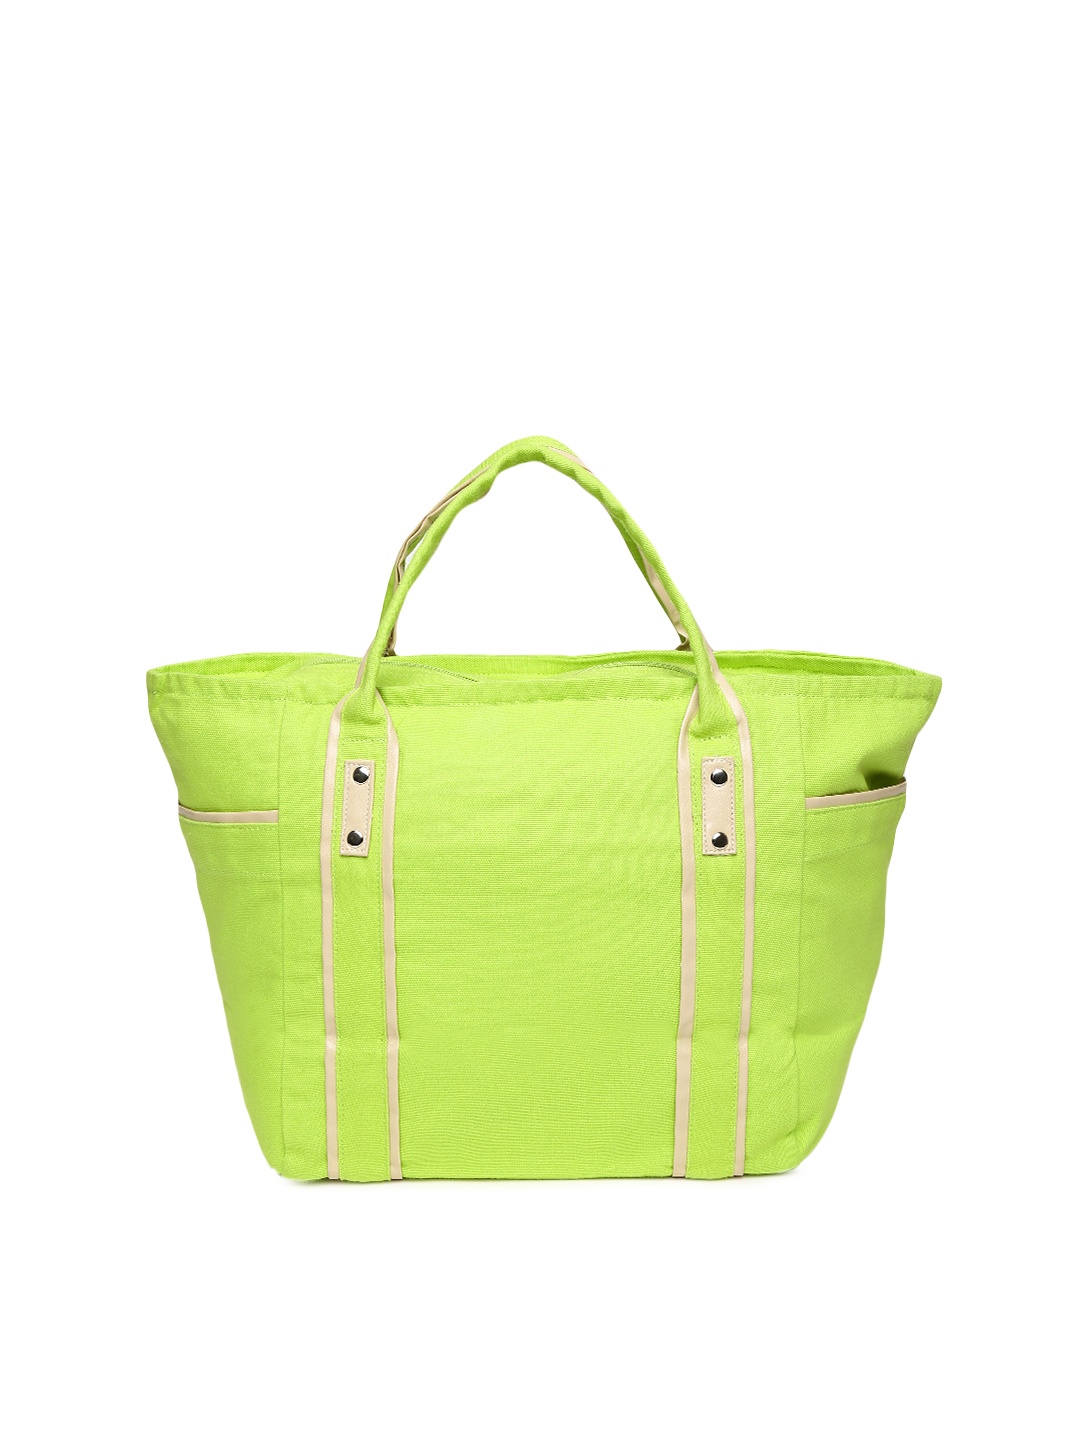 Myntra YOLO Lime Green Handbag 667120 | Buy Myntra YOLO Handbags at best price online. All ...